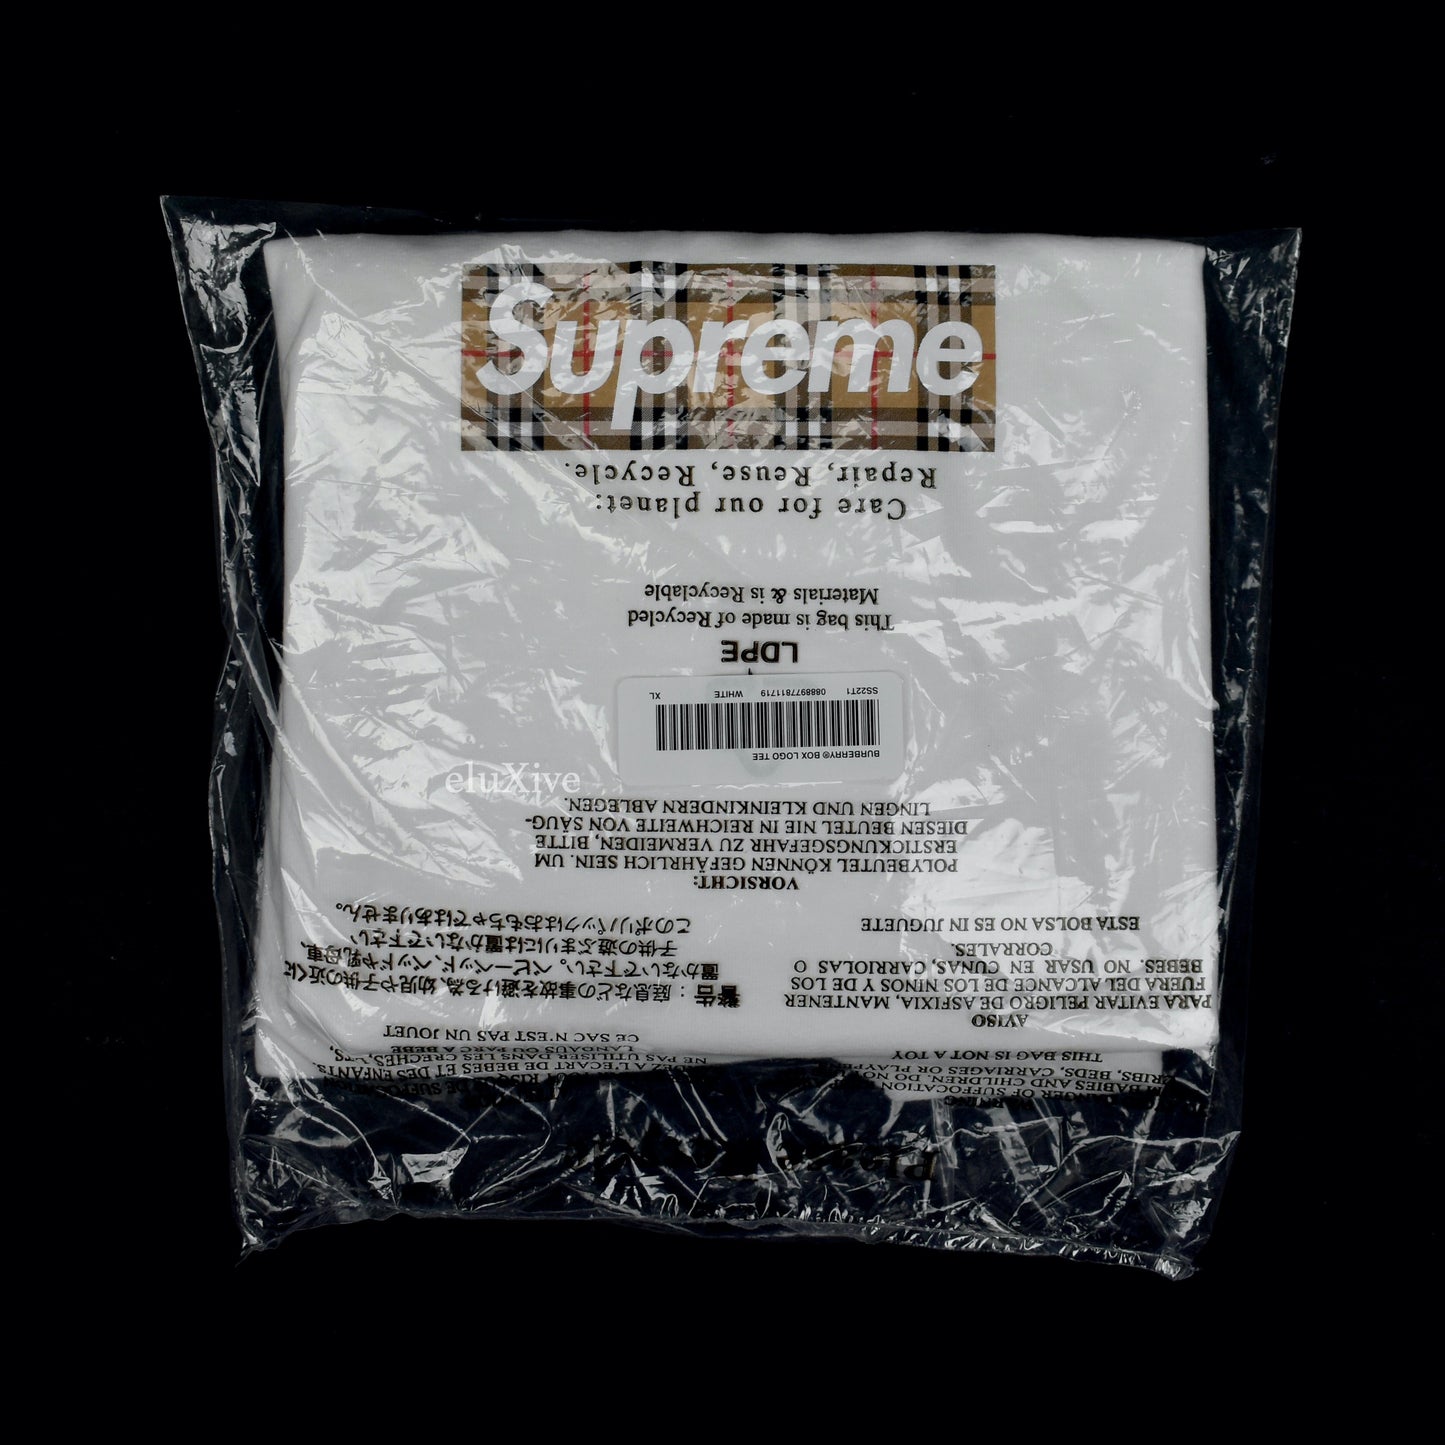 Supreme x Burberry box logo tee